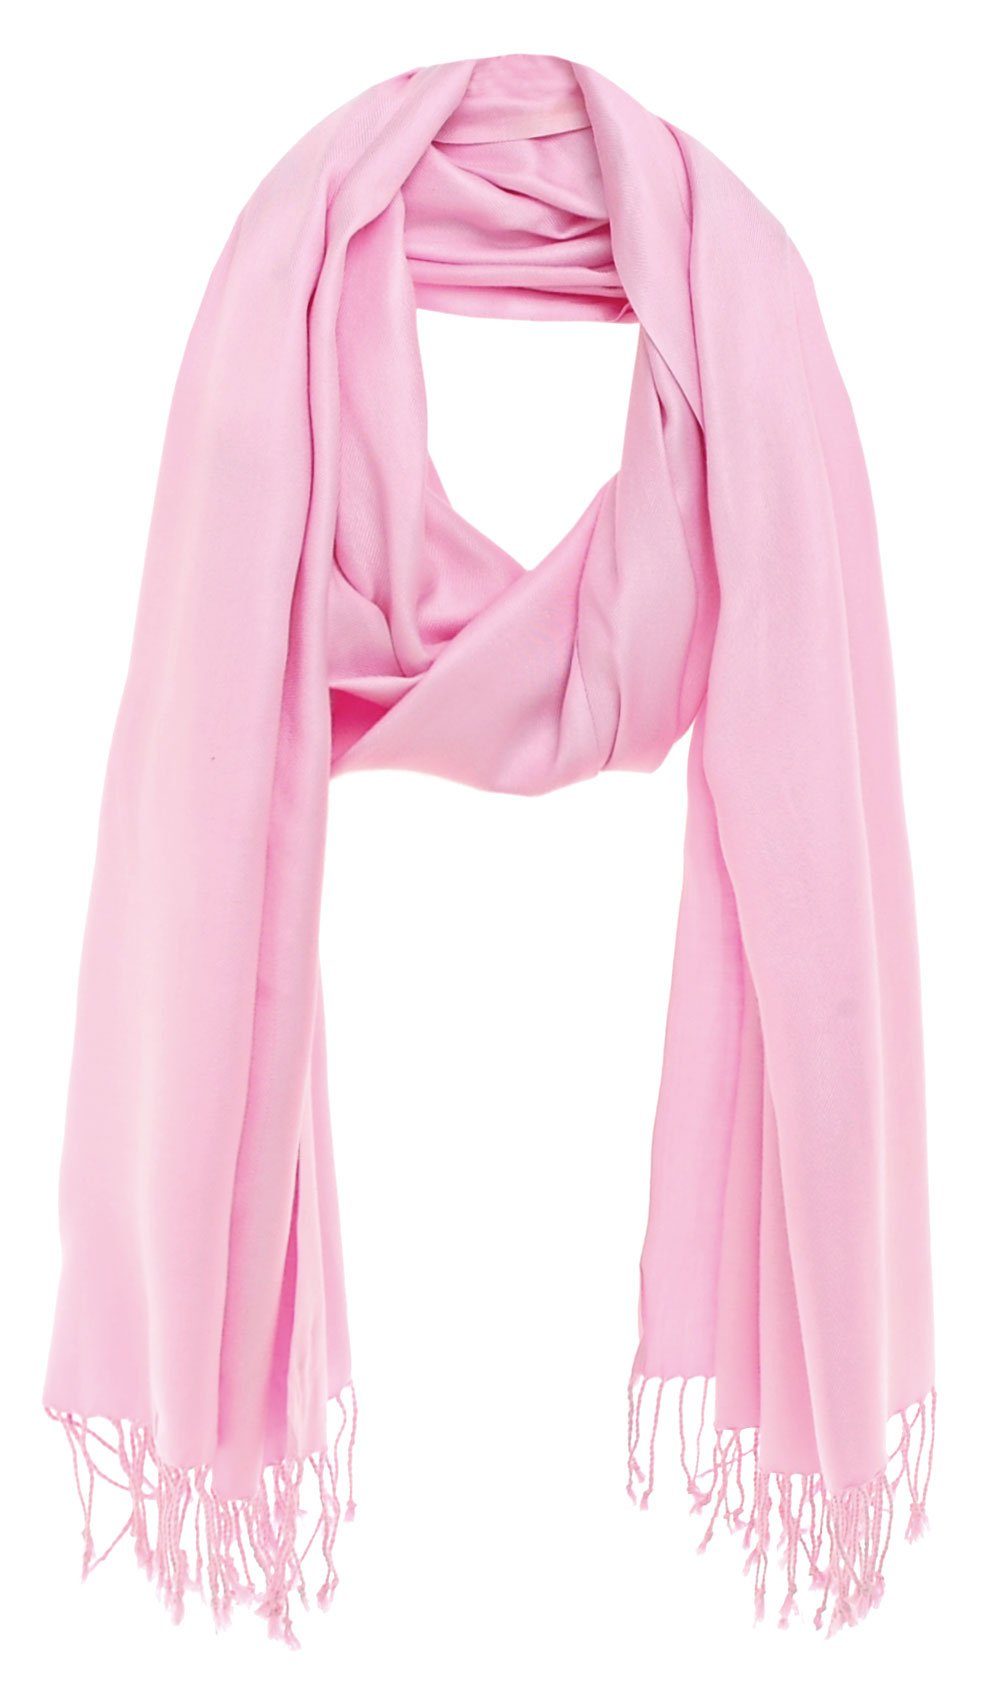 rosa XL Seide glänzend Schal Pashmina 100% 200x70 Damen-Schal cm Premium aus wie Bovari -, weich Kaschmir Viskose wie - -